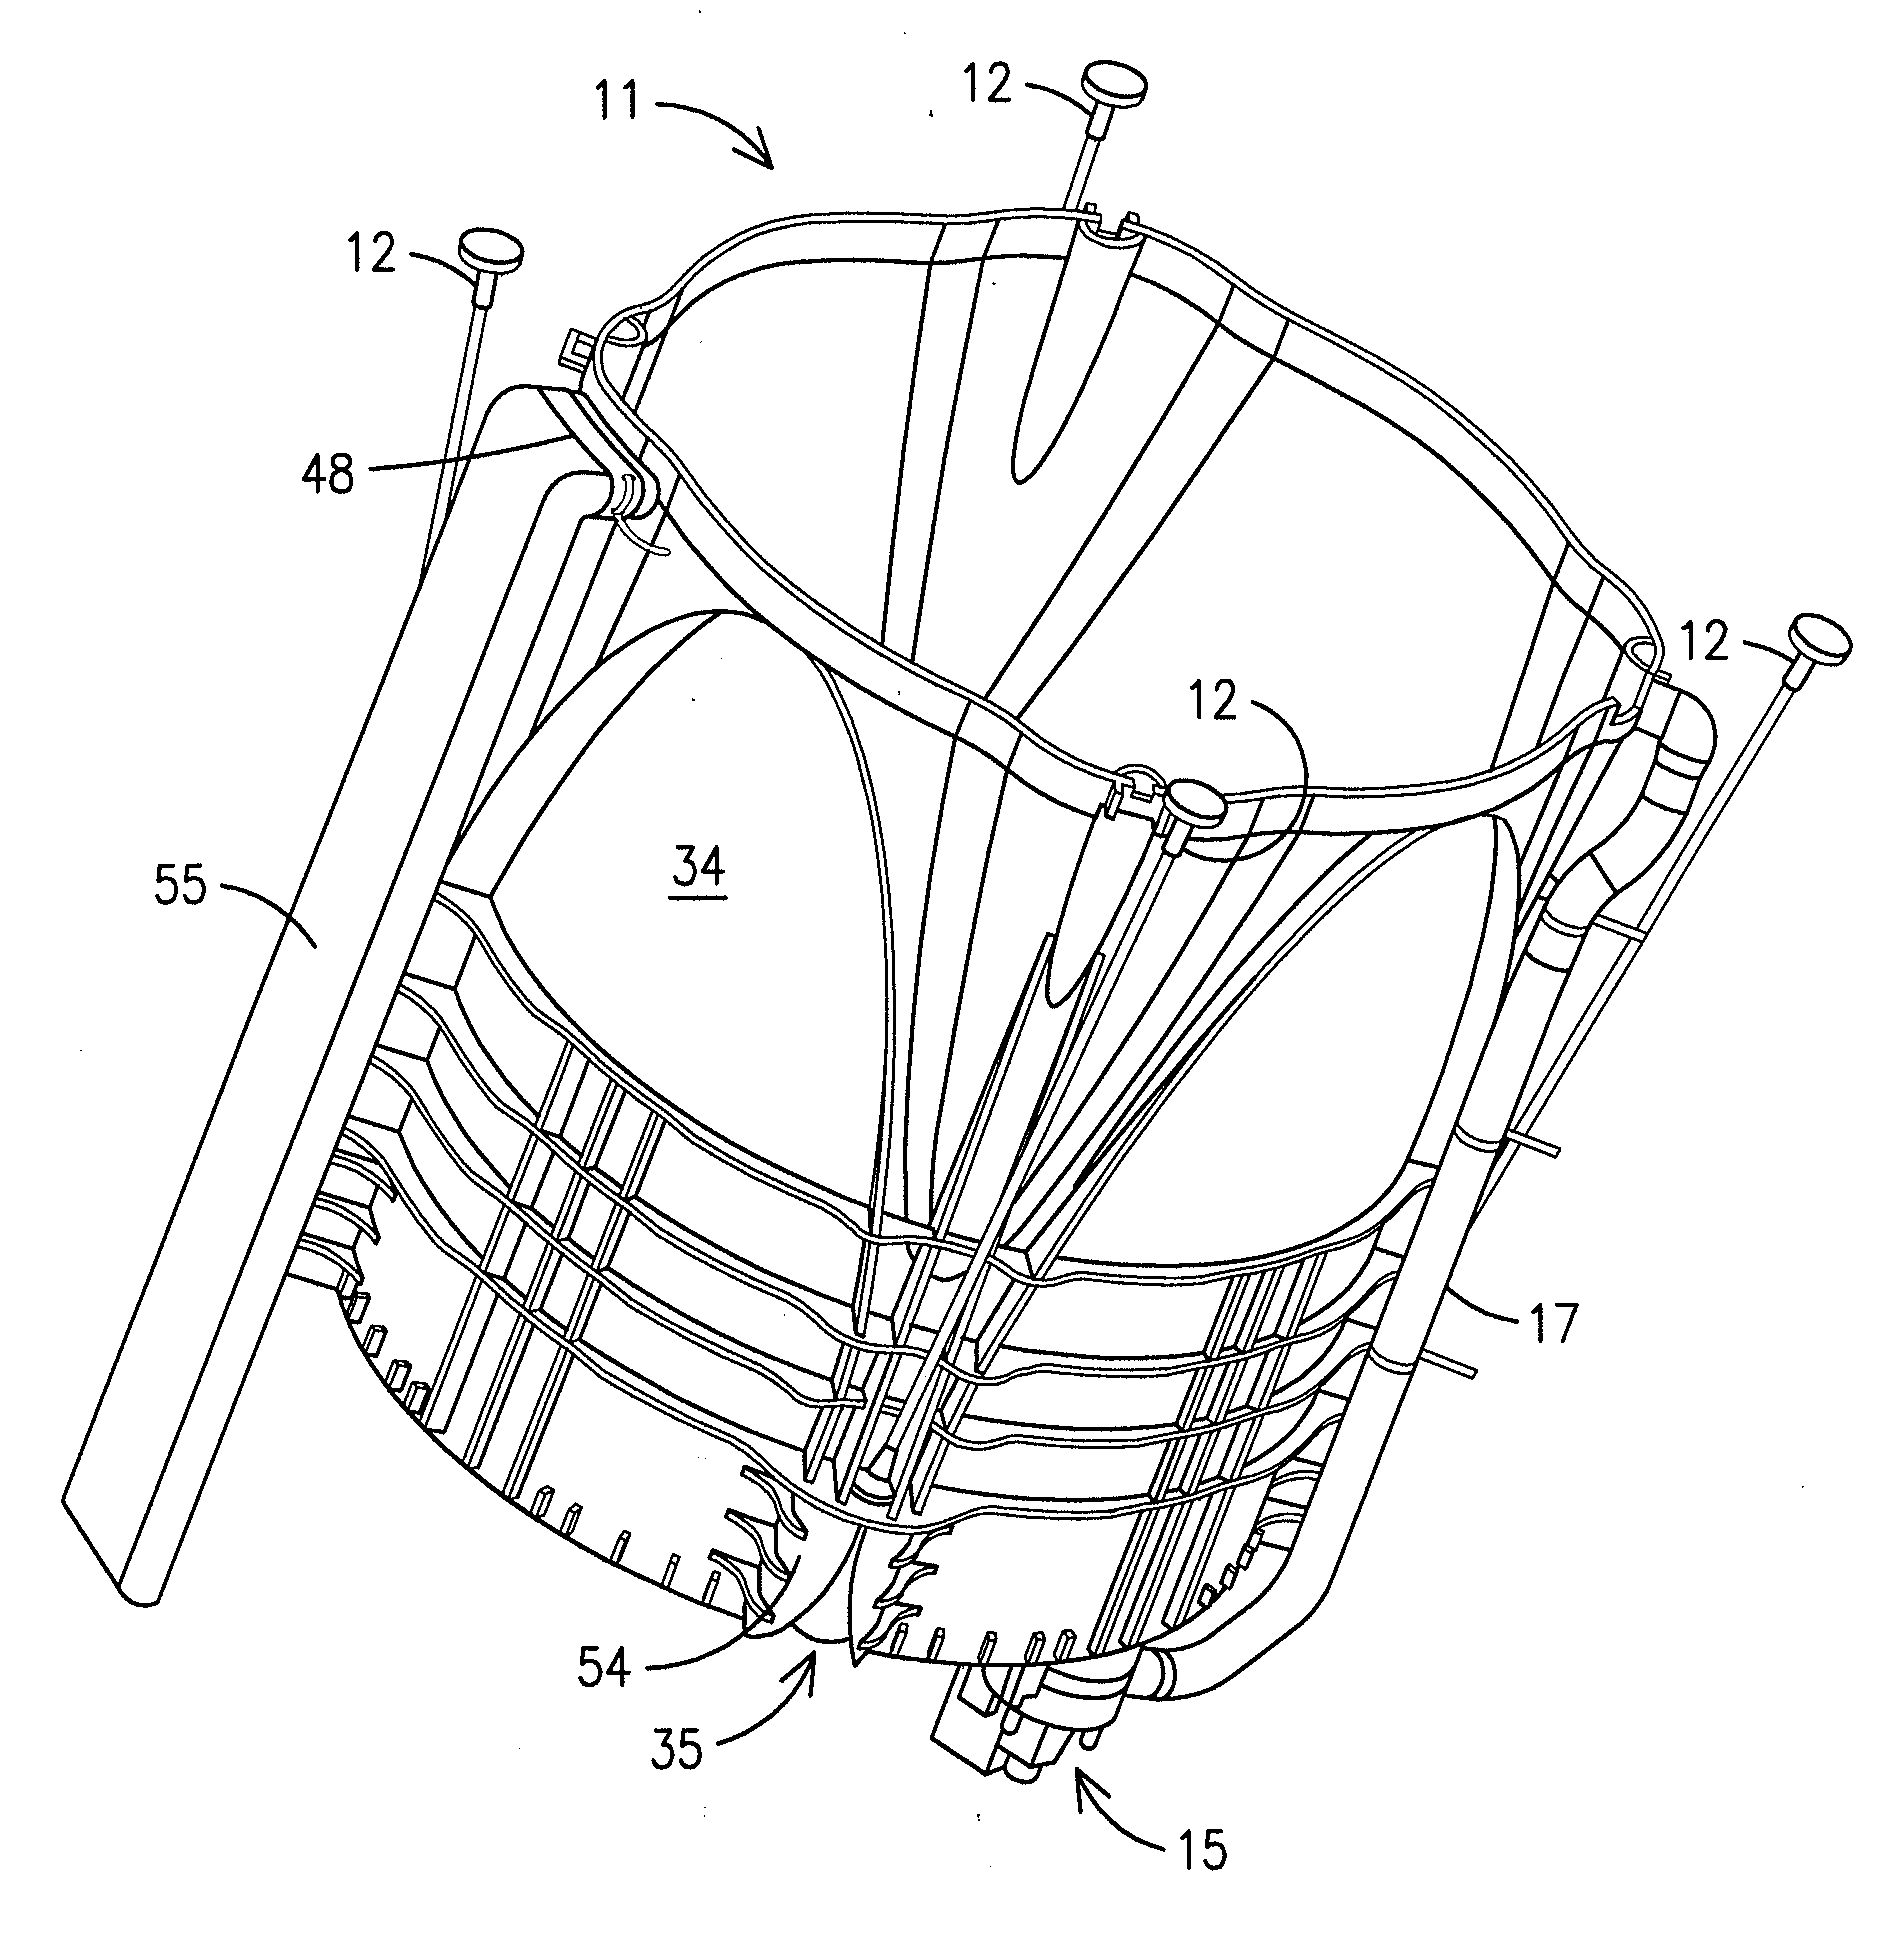 Geometric Configuration of Tub